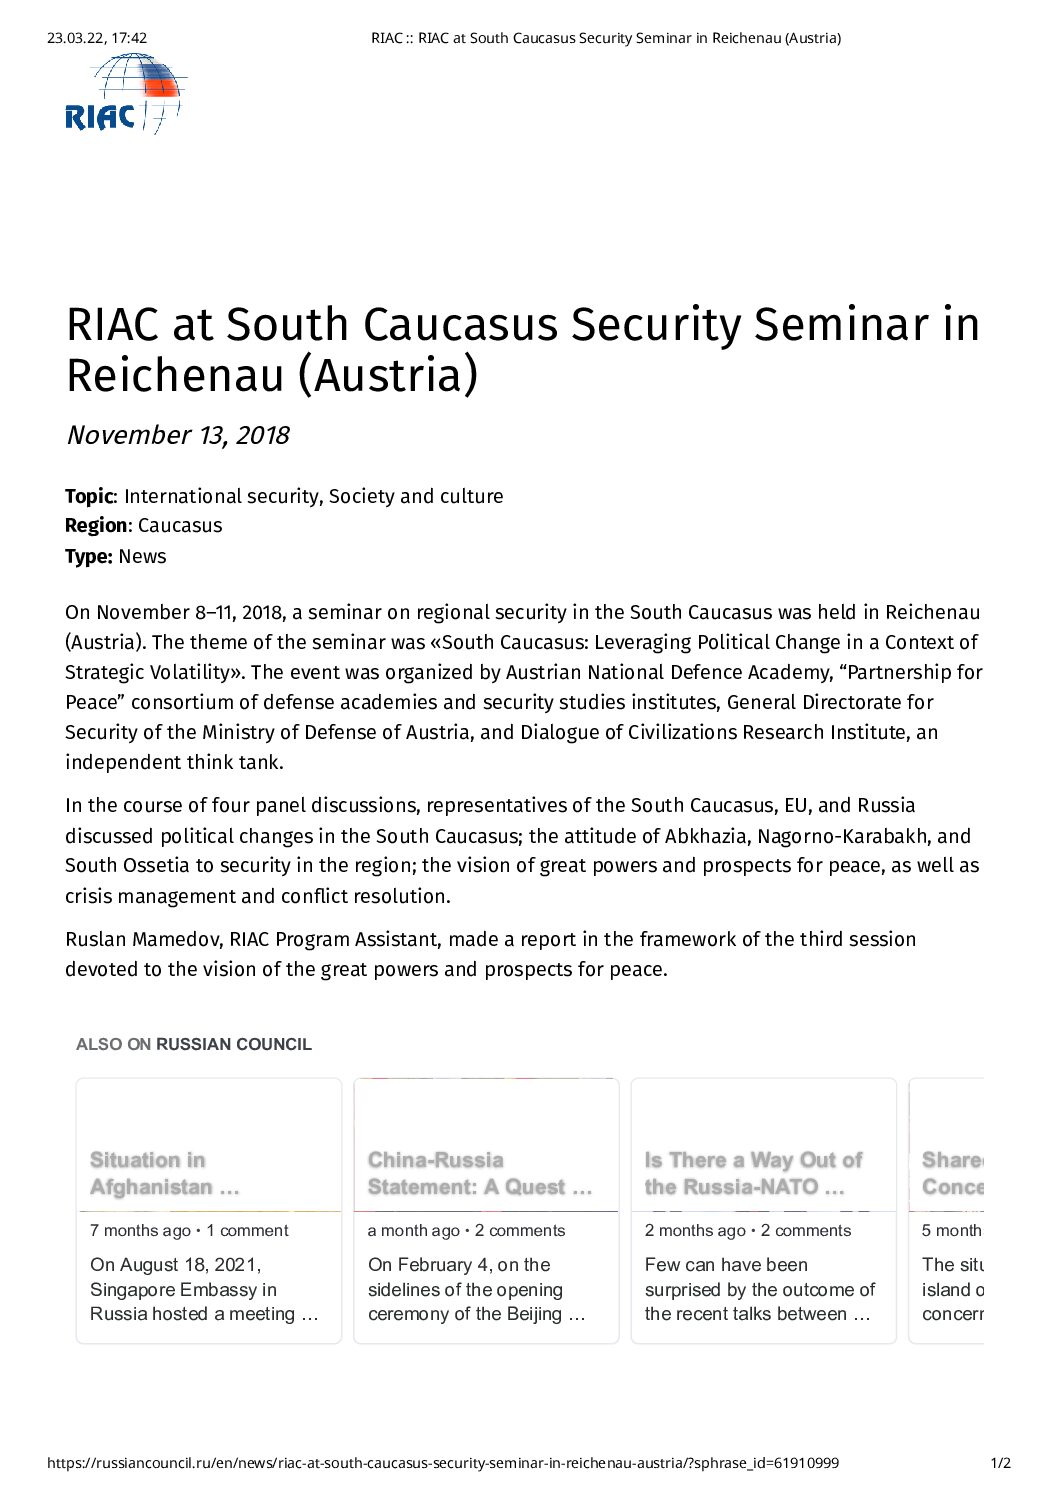 RIAC-__-RIAC-at-South-Caucasus-Security-Seminar-in-Reichenau-Austria